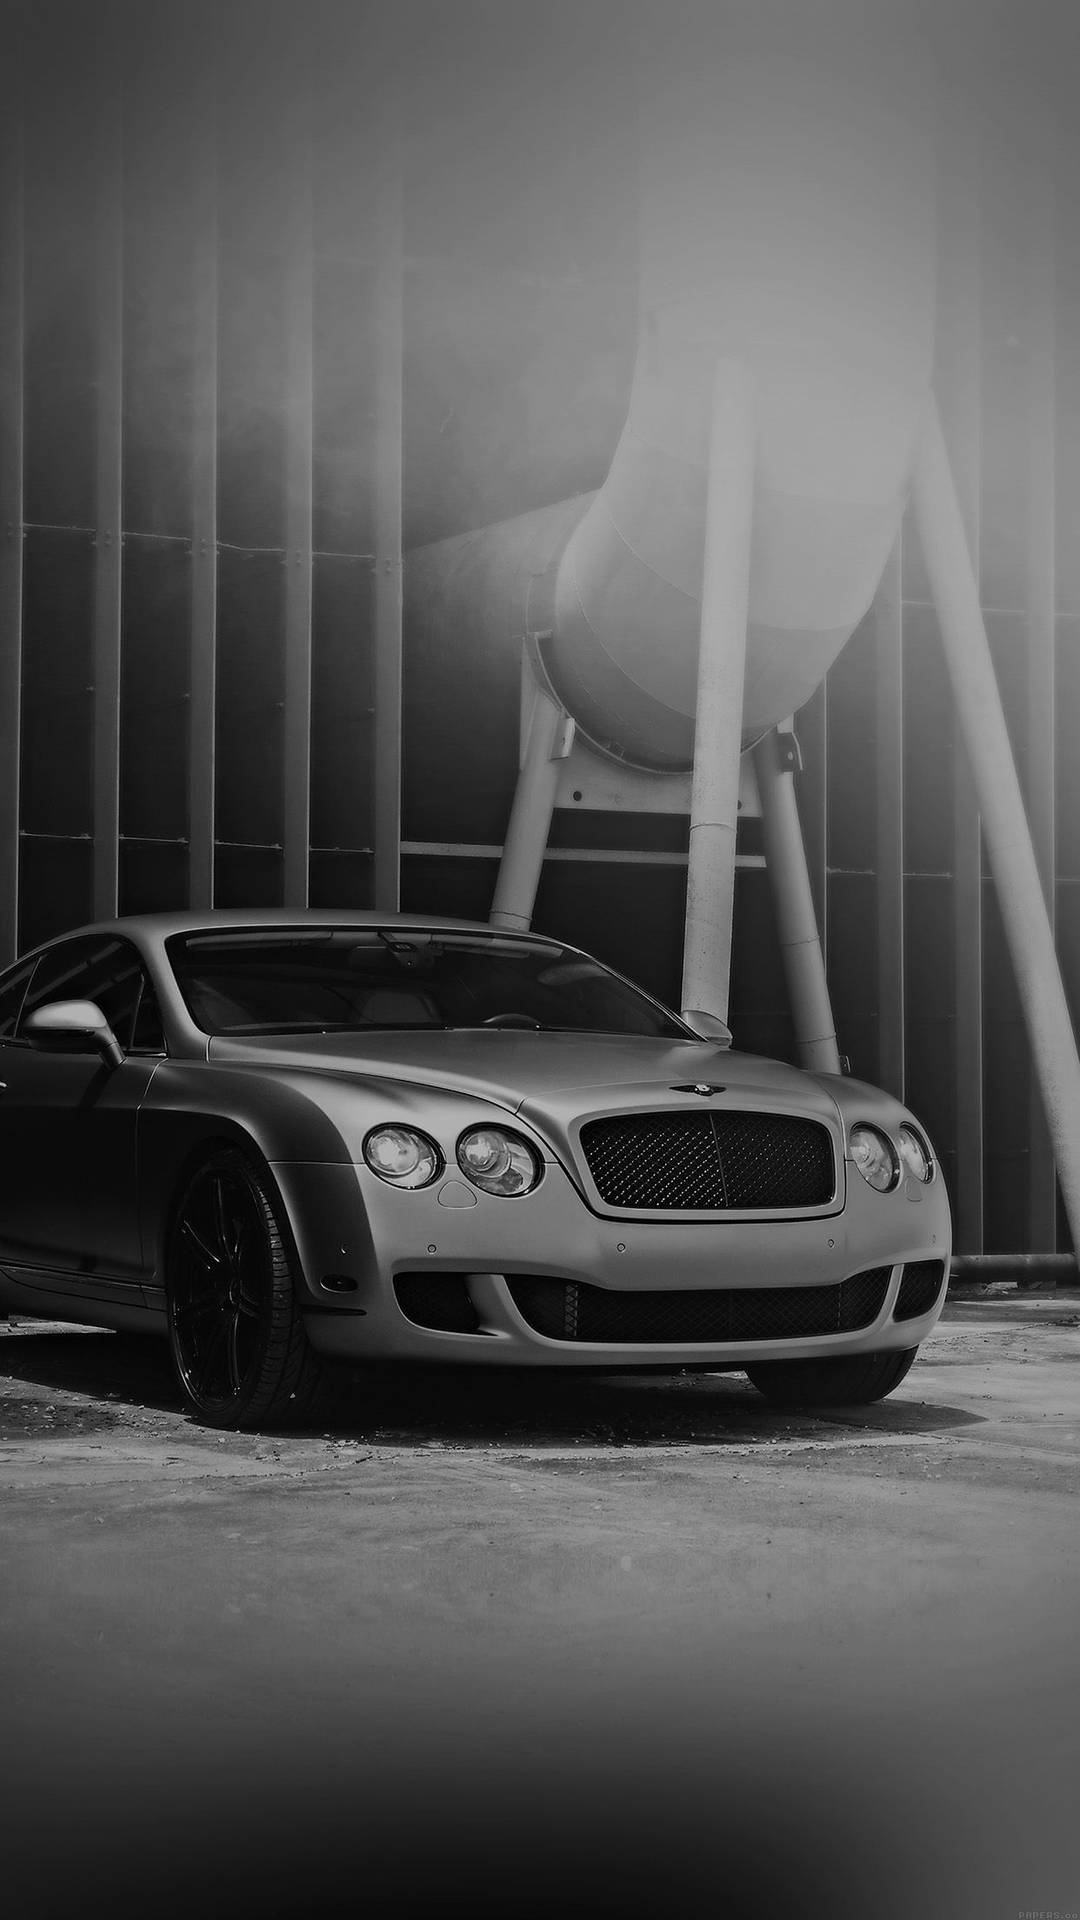 Wallpapergråskalig Bentley-iphone-bakgrundsbild. Wallpaper